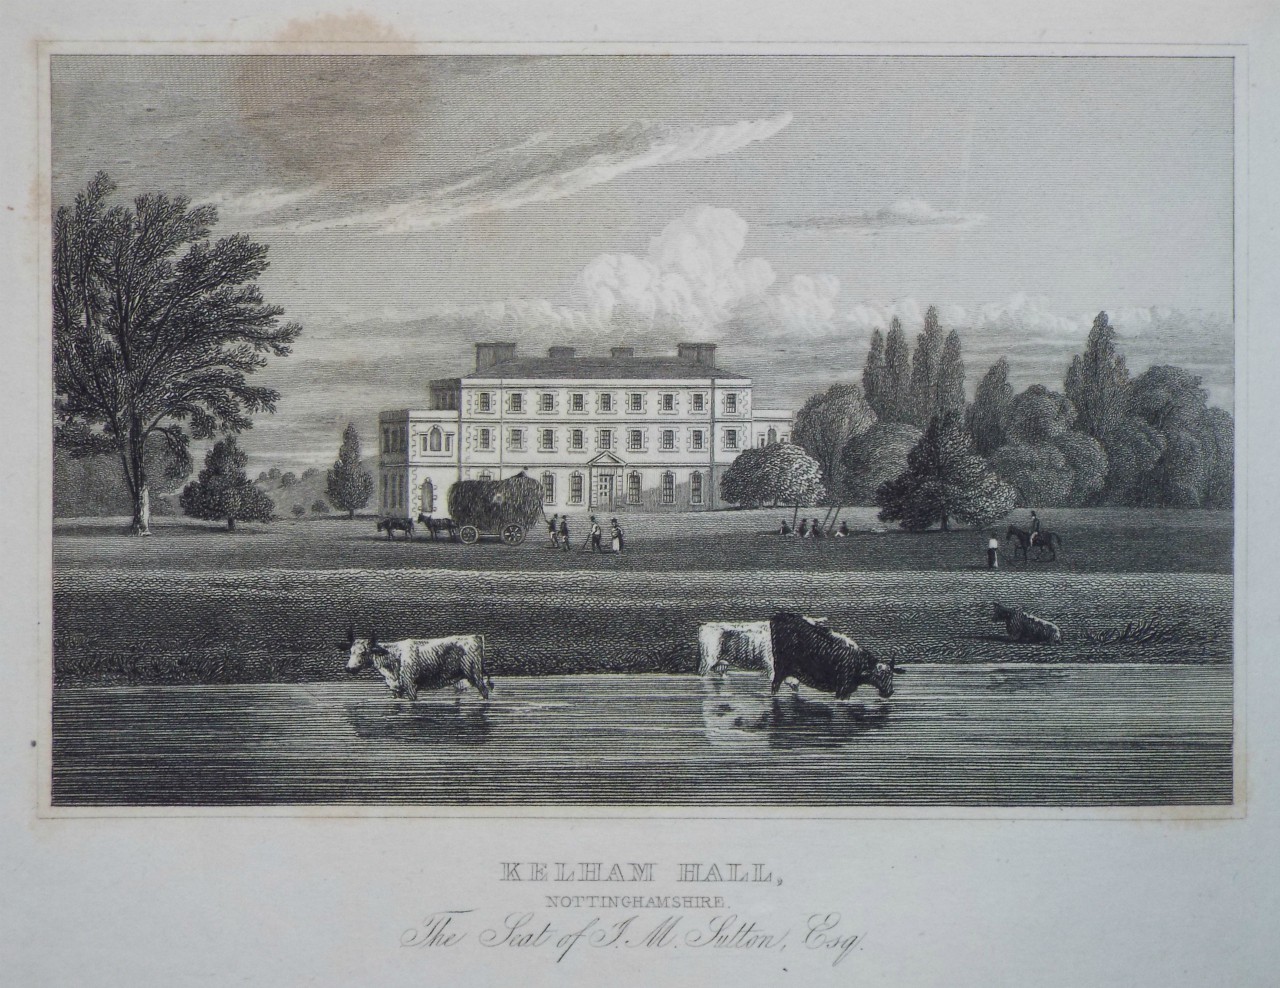 Print - Kelham Hall, Nottinghamshire. The Seat of J. M. Sutton, Esq. - Farthorn